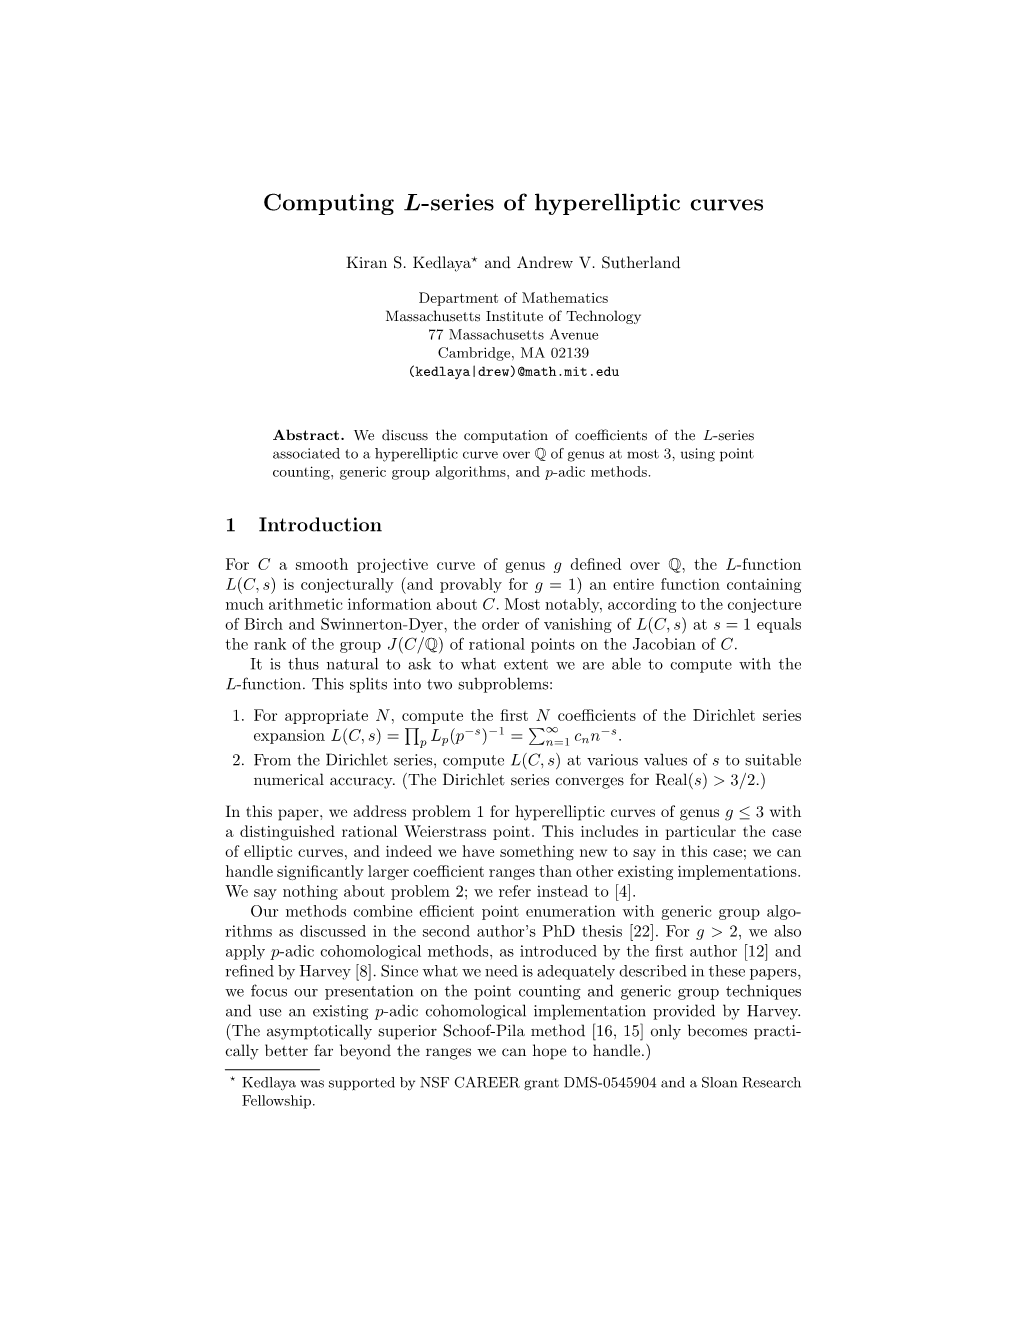 Computing L-Series of Hyperelliptic Curves